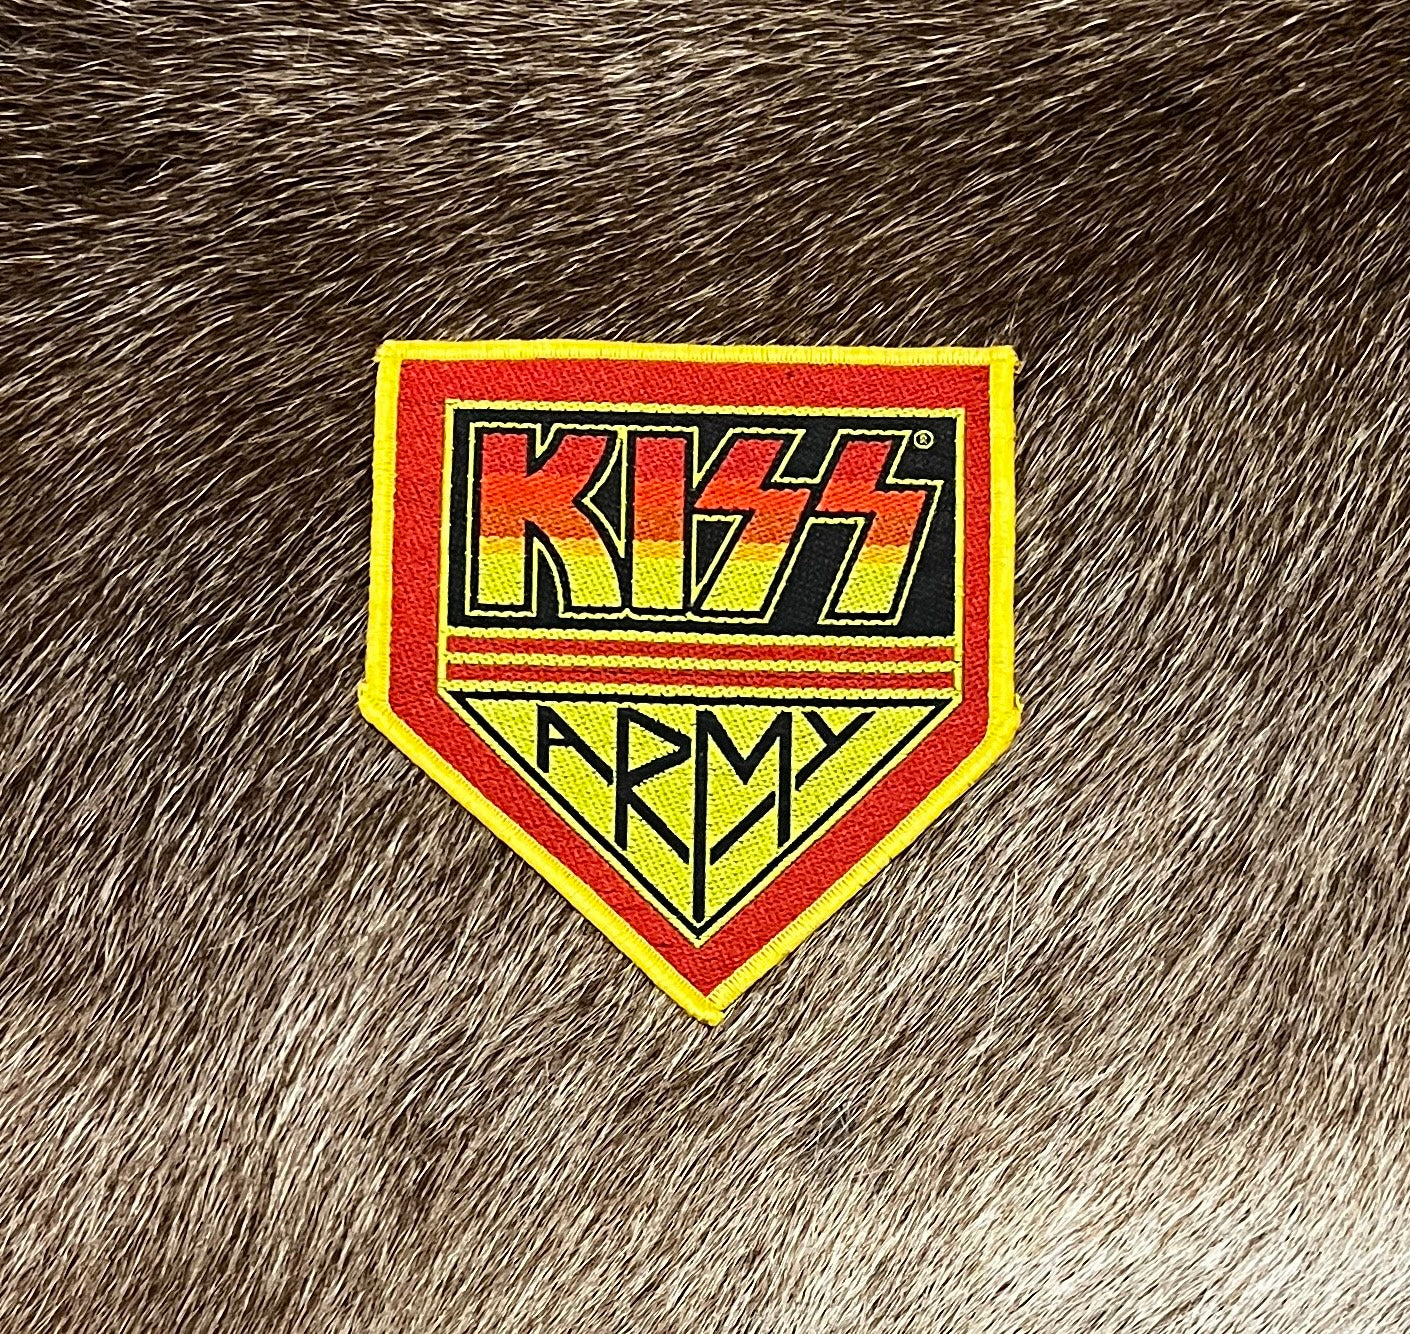 Kiss - Kiss Army Patch